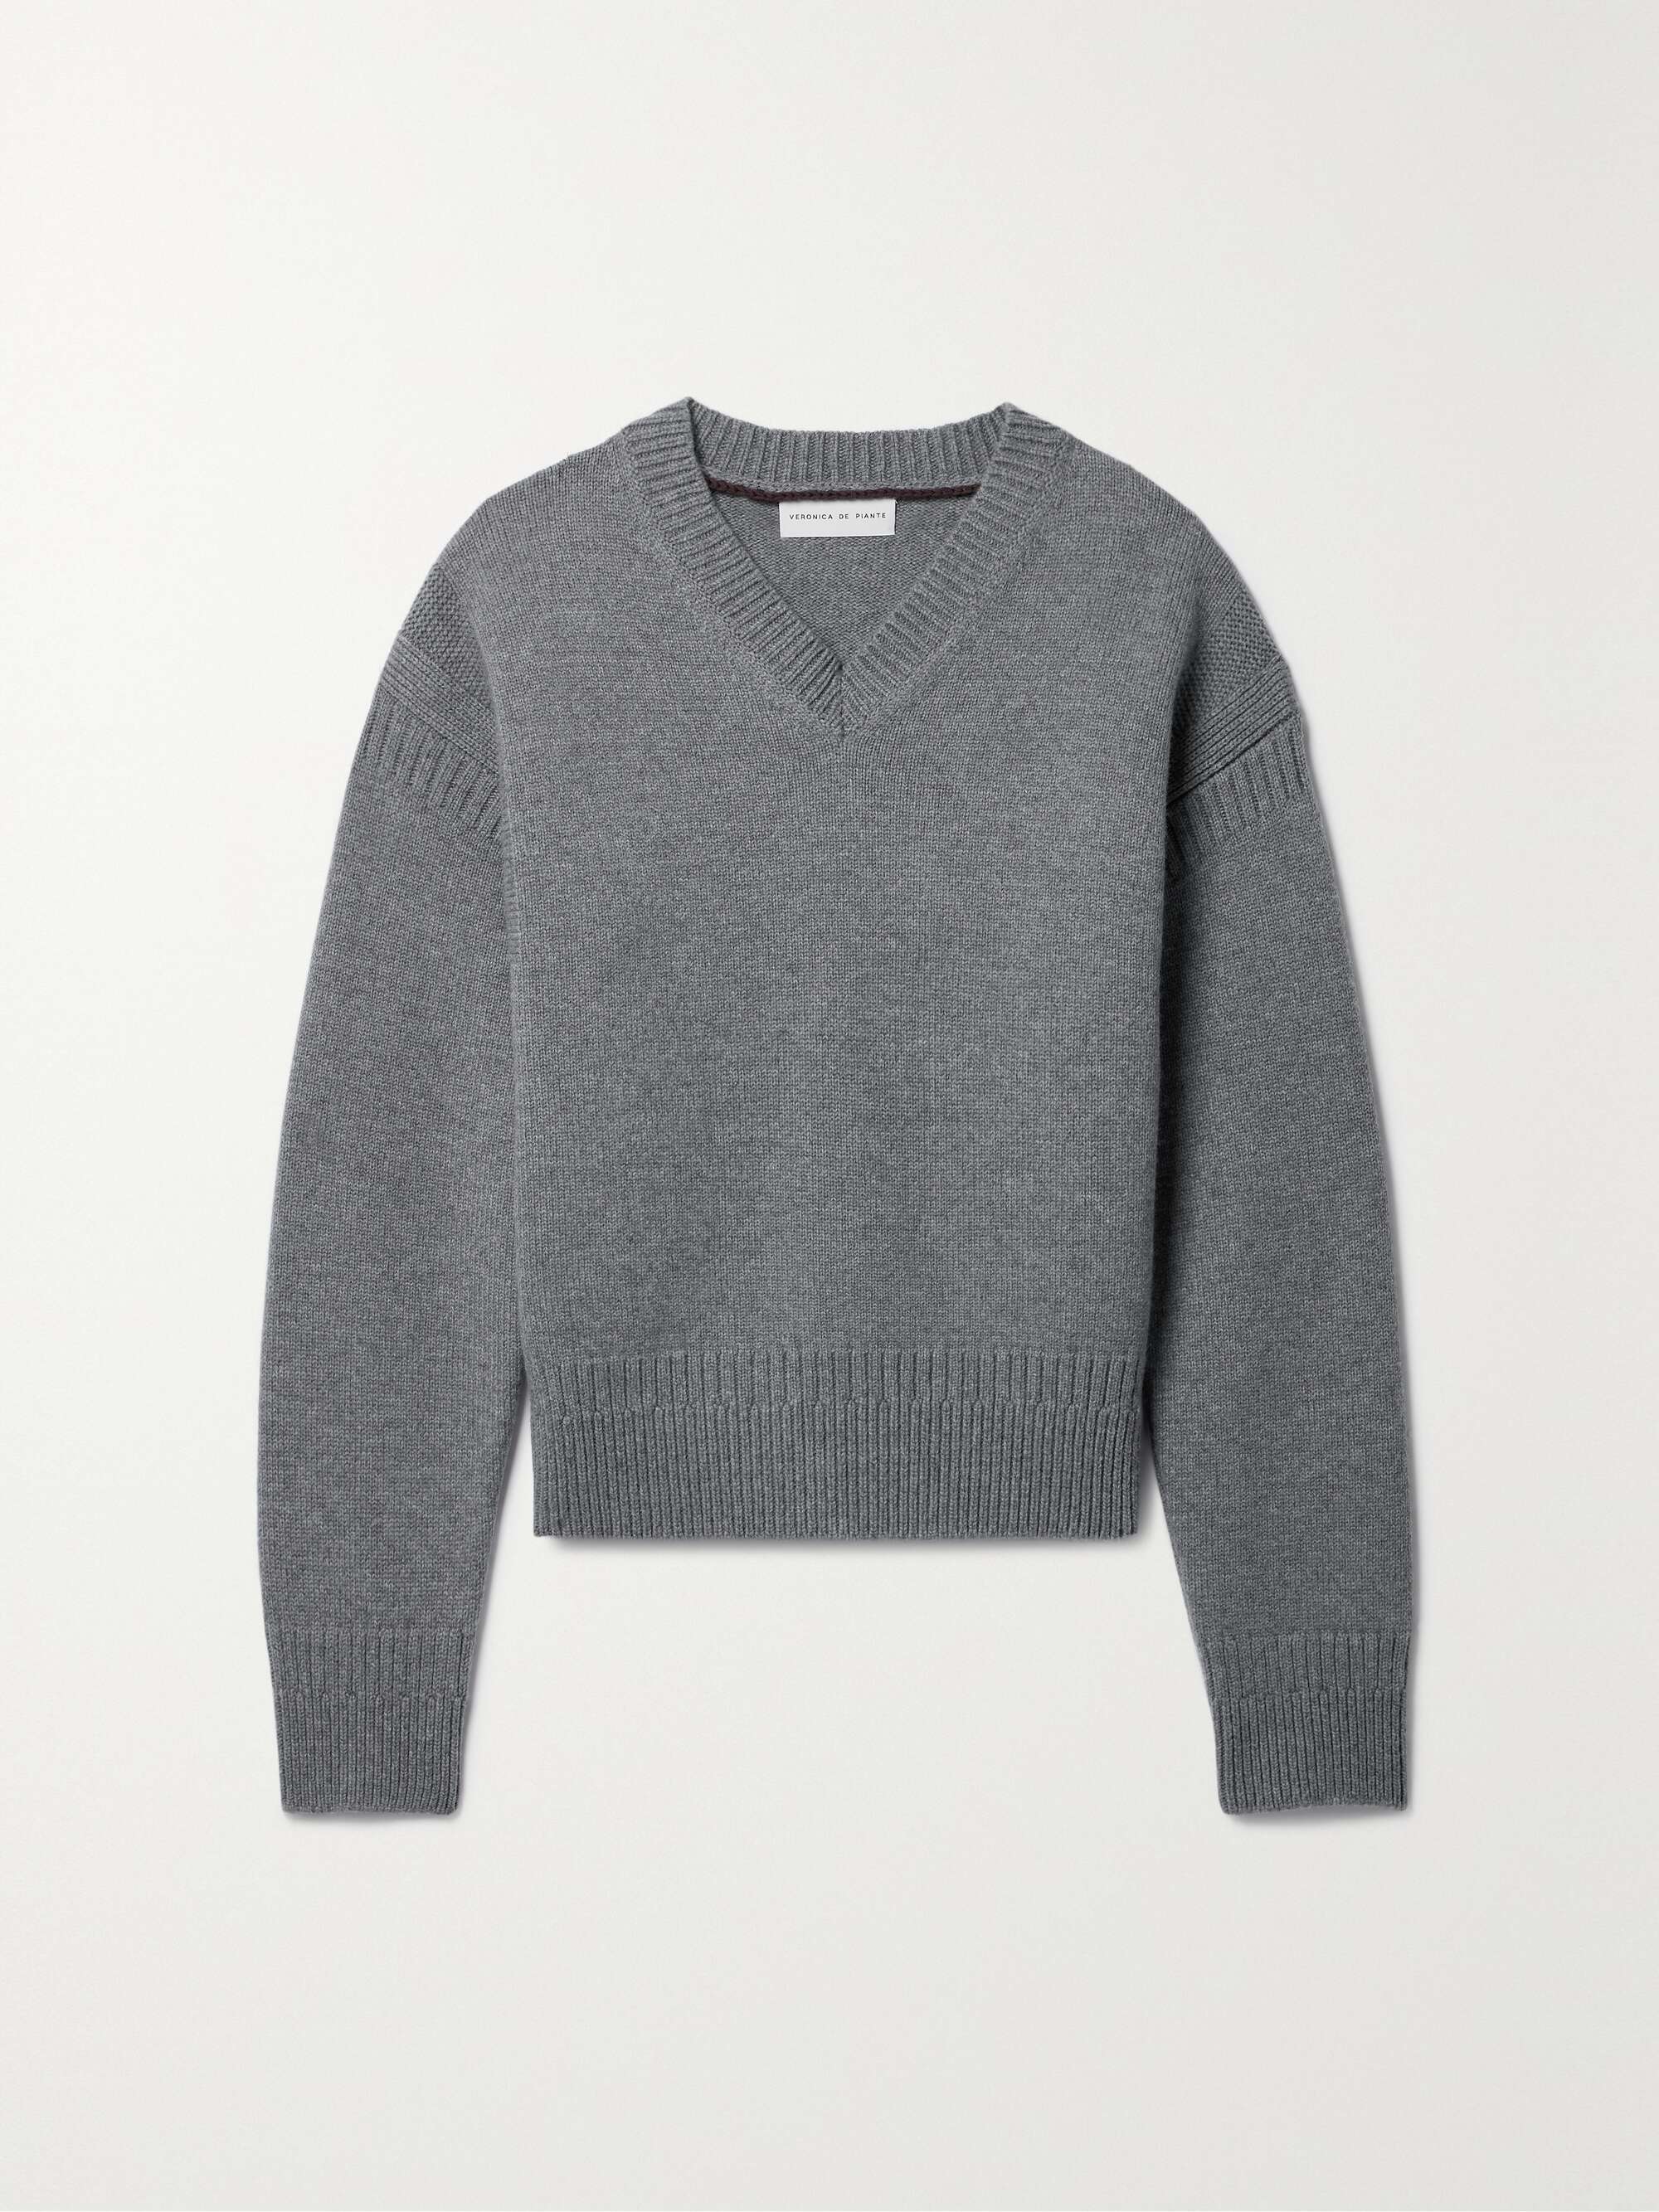 Veronica De Piante + Poppy Wool and Cashmere-Blend Sweater